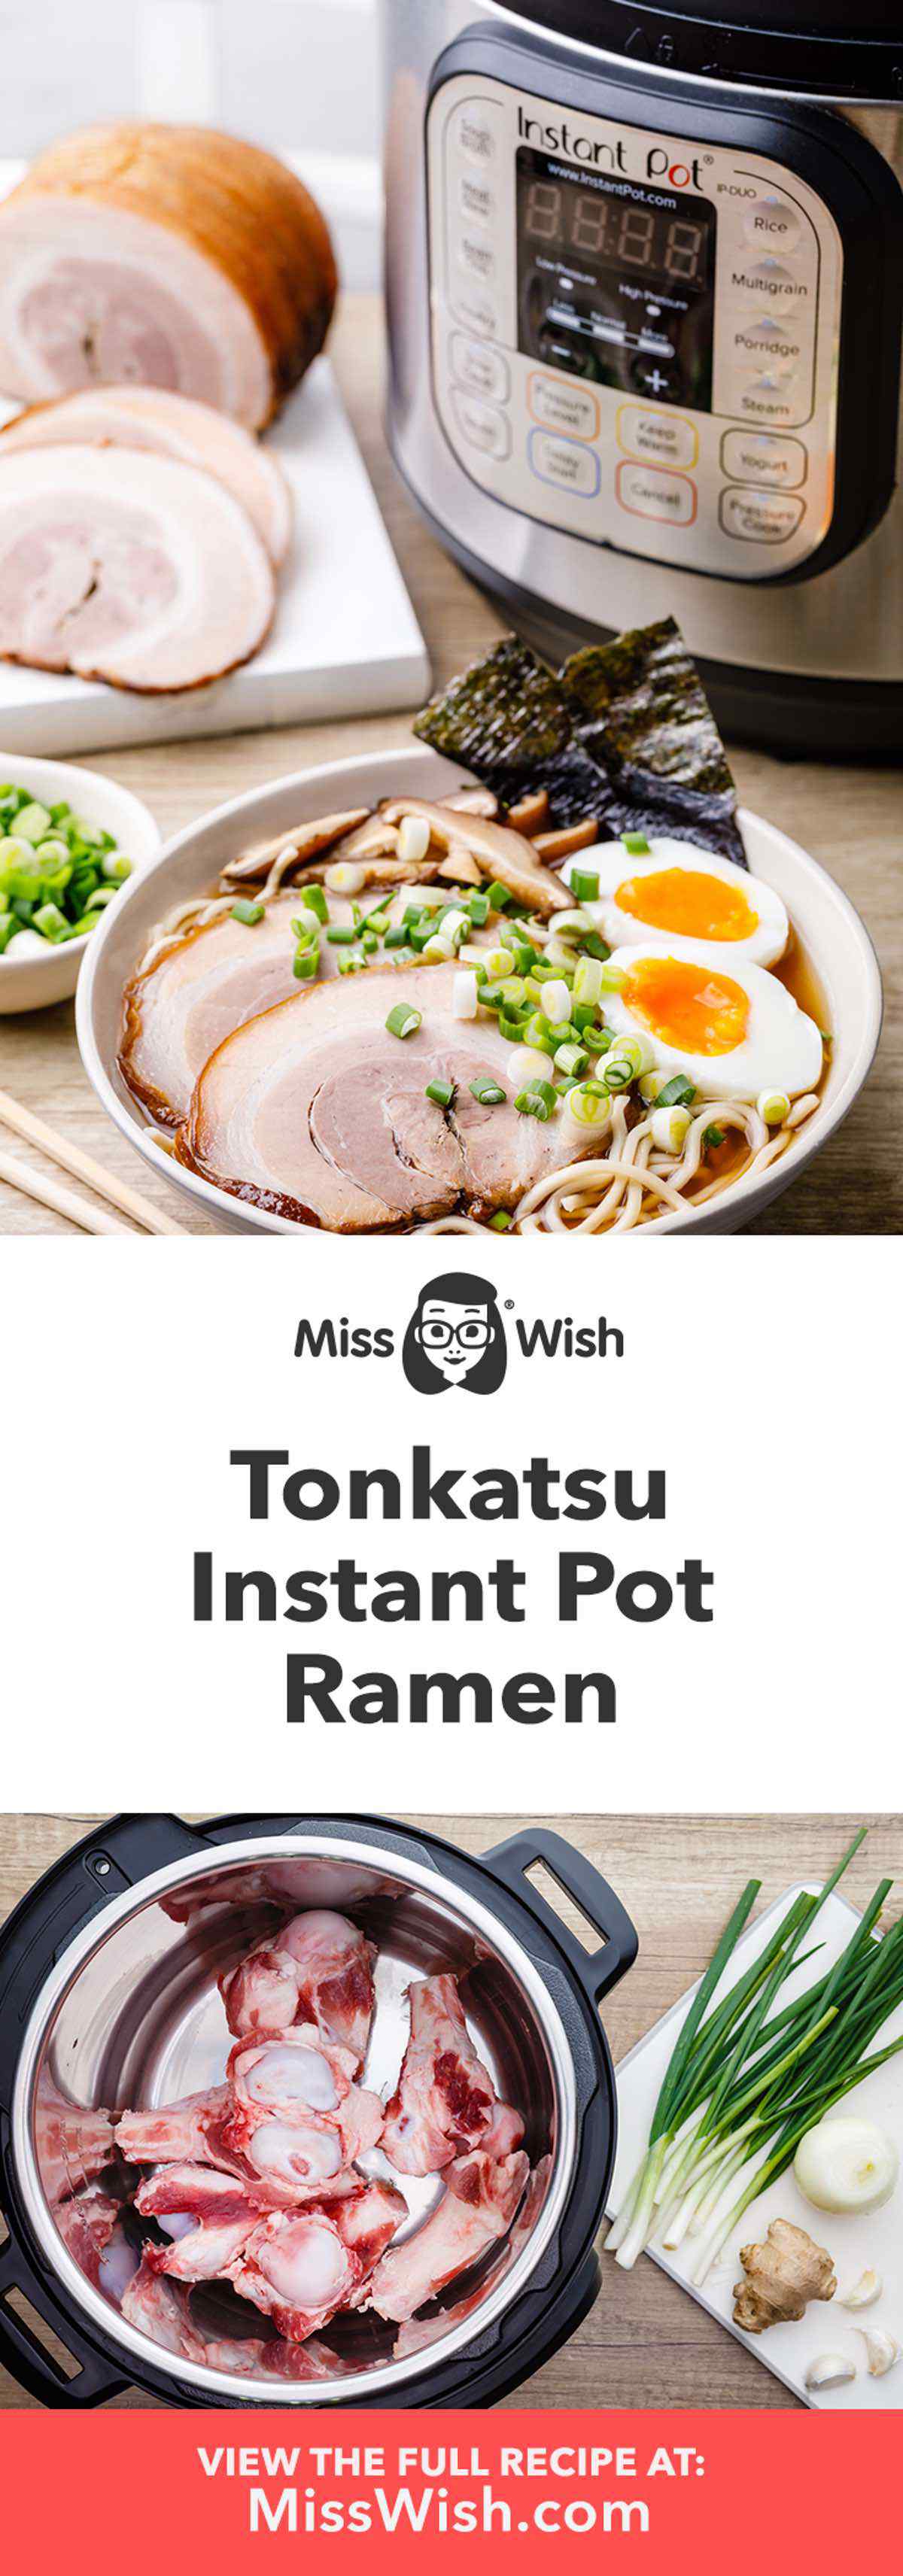 Tonkatsu Instant Pot Ramen